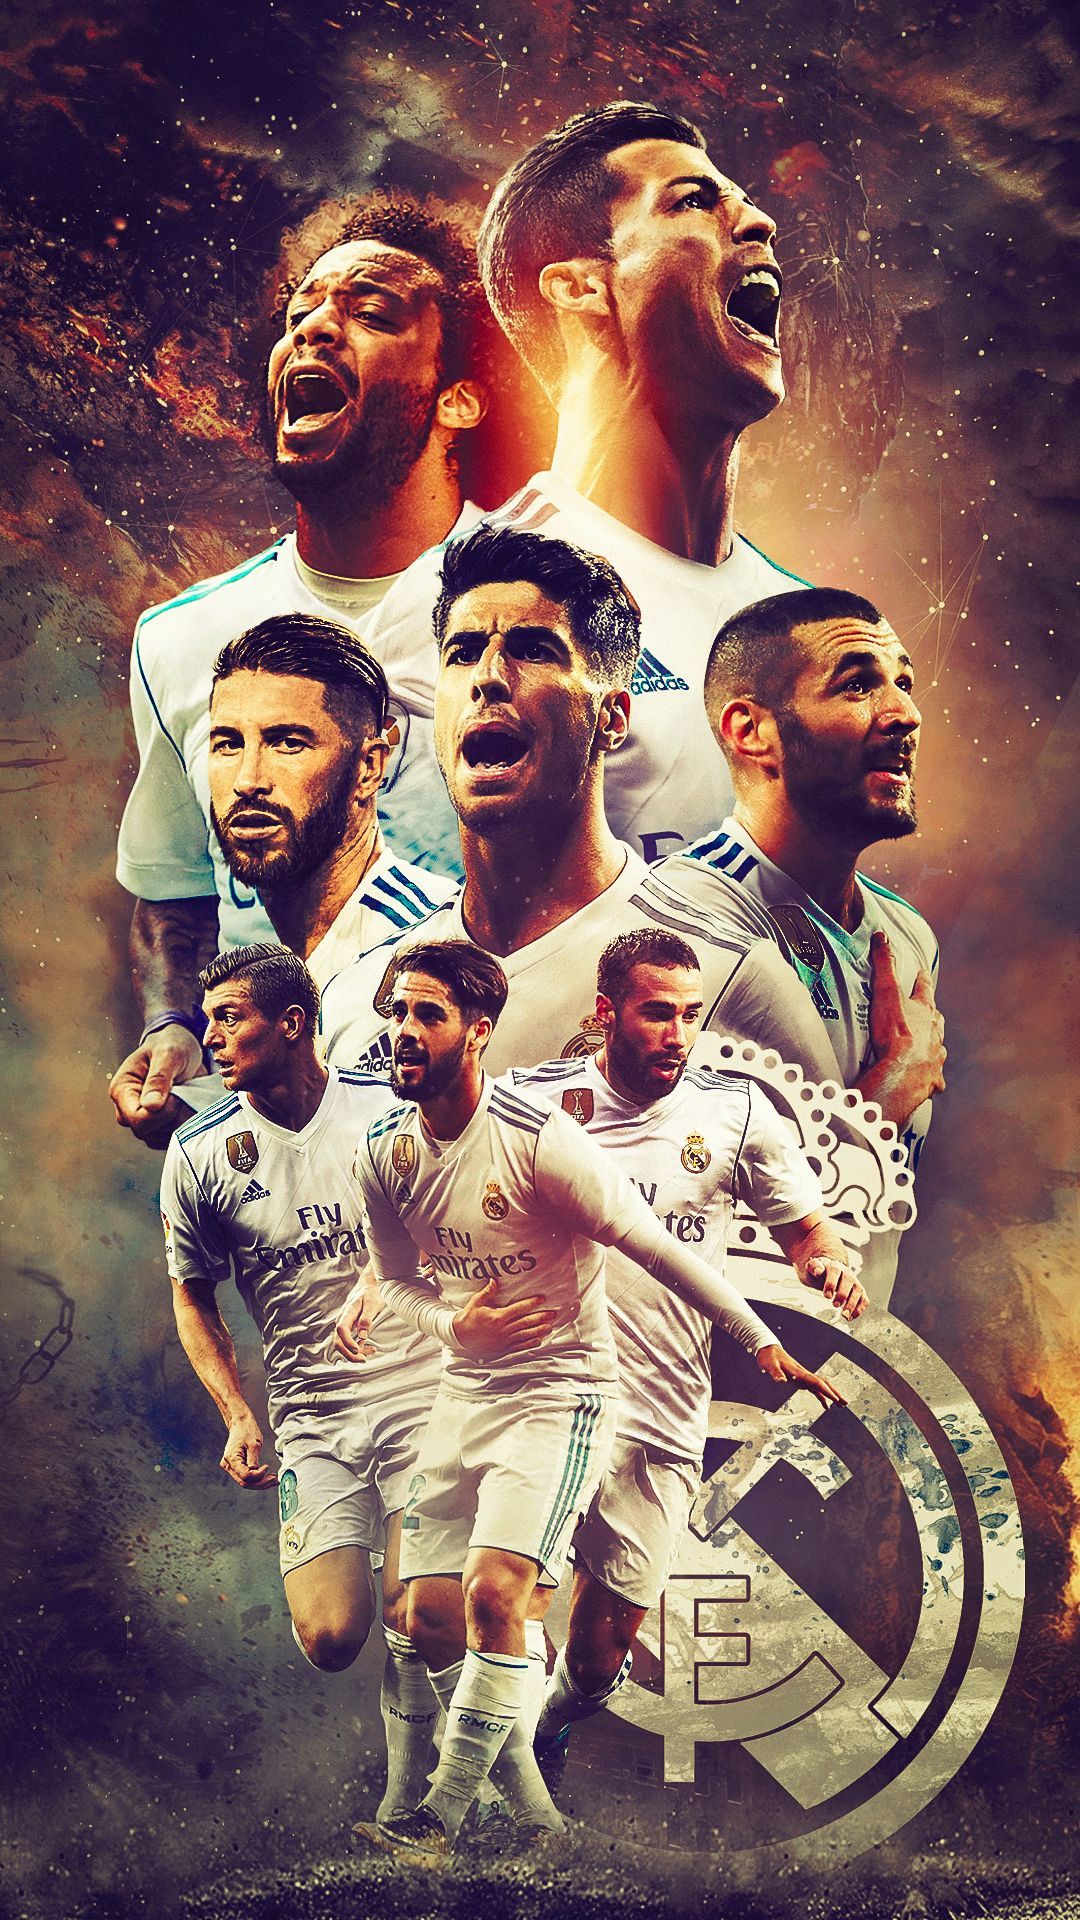 Football Posters. Real madrid wallpaper, Real madrid football, Real madrid players